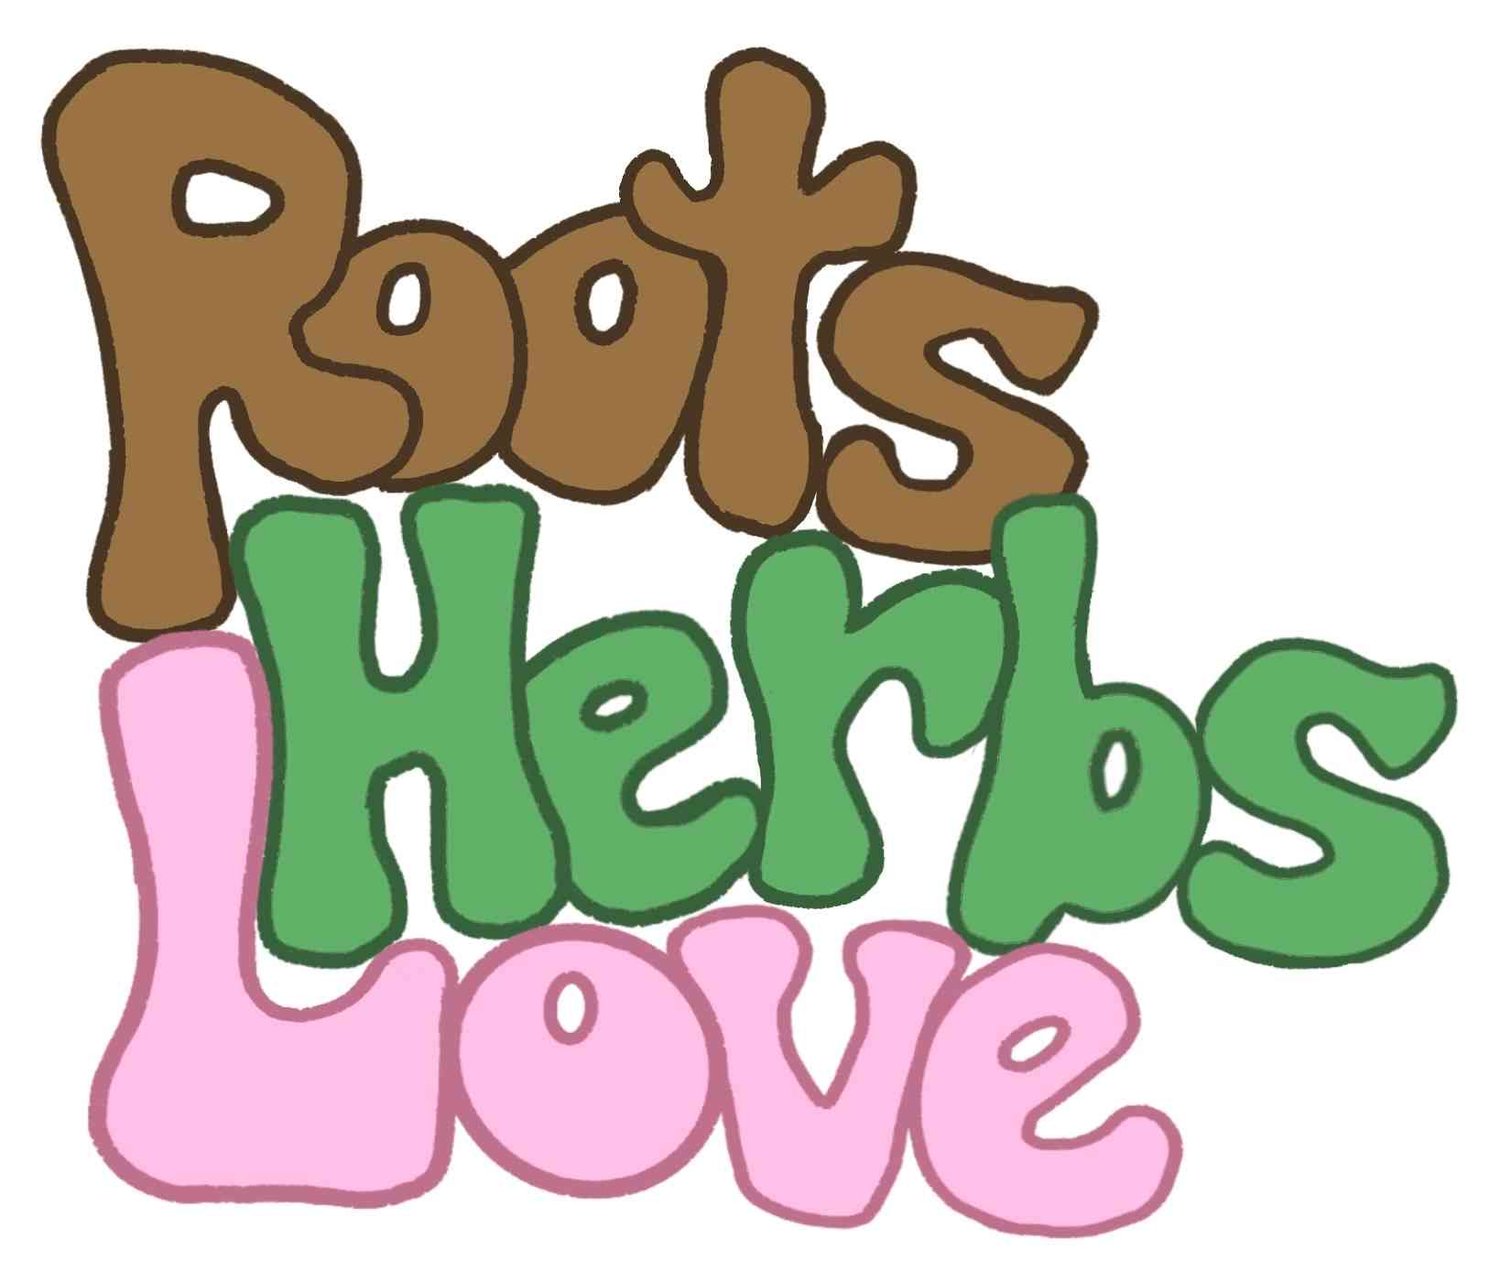 ROOTS, HERBS, LOVE